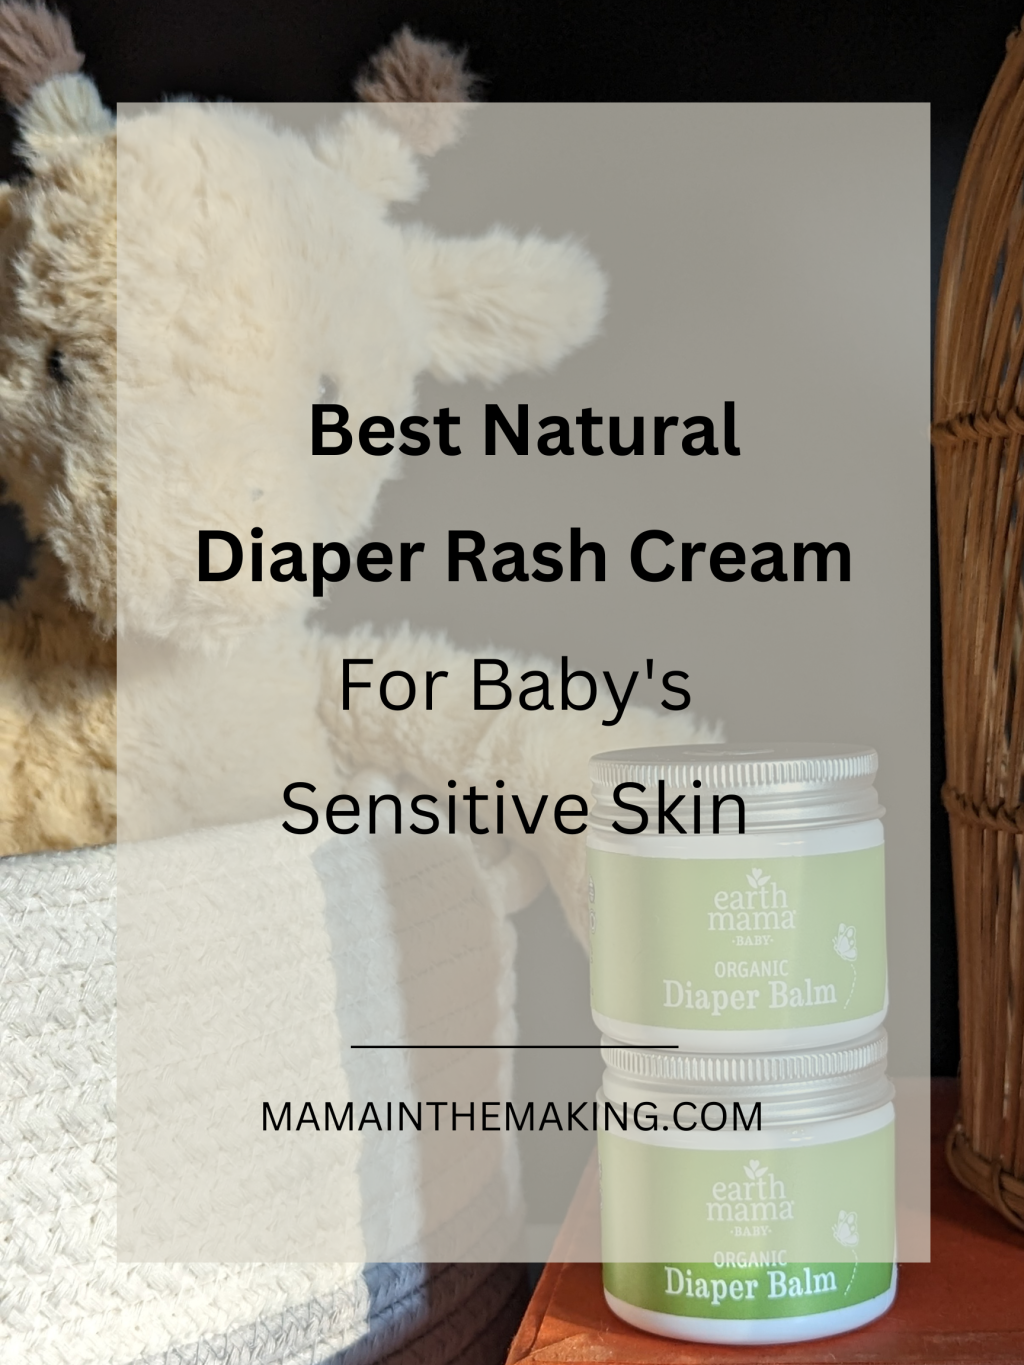 Best Natural Diaper Rash Cream for Baby’s Sensitive Skin